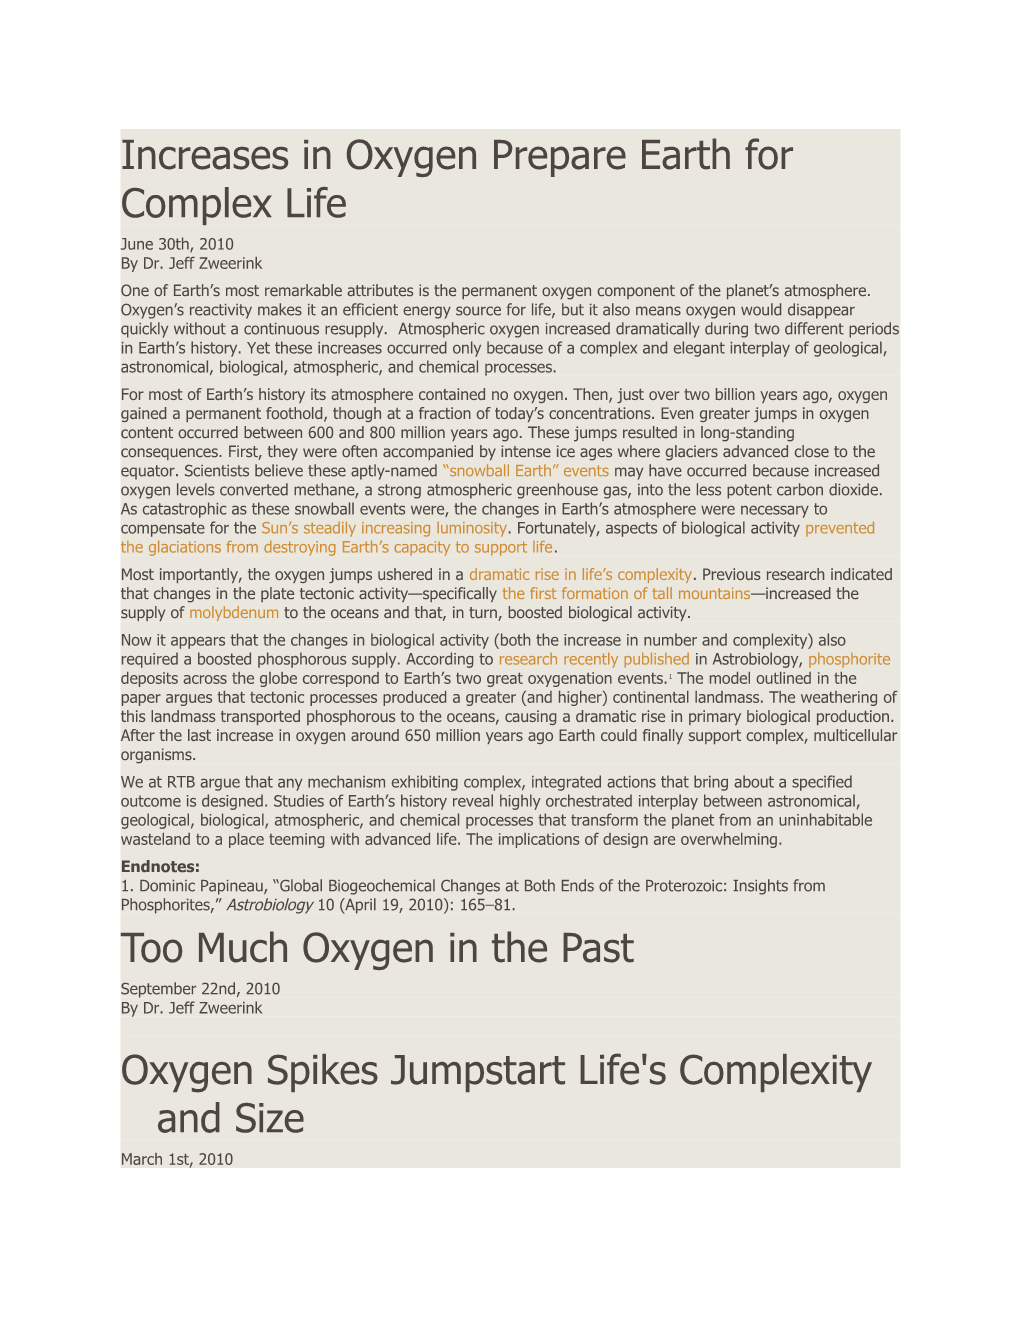 Increases in Oxygen Prepare Earth for Complex Life